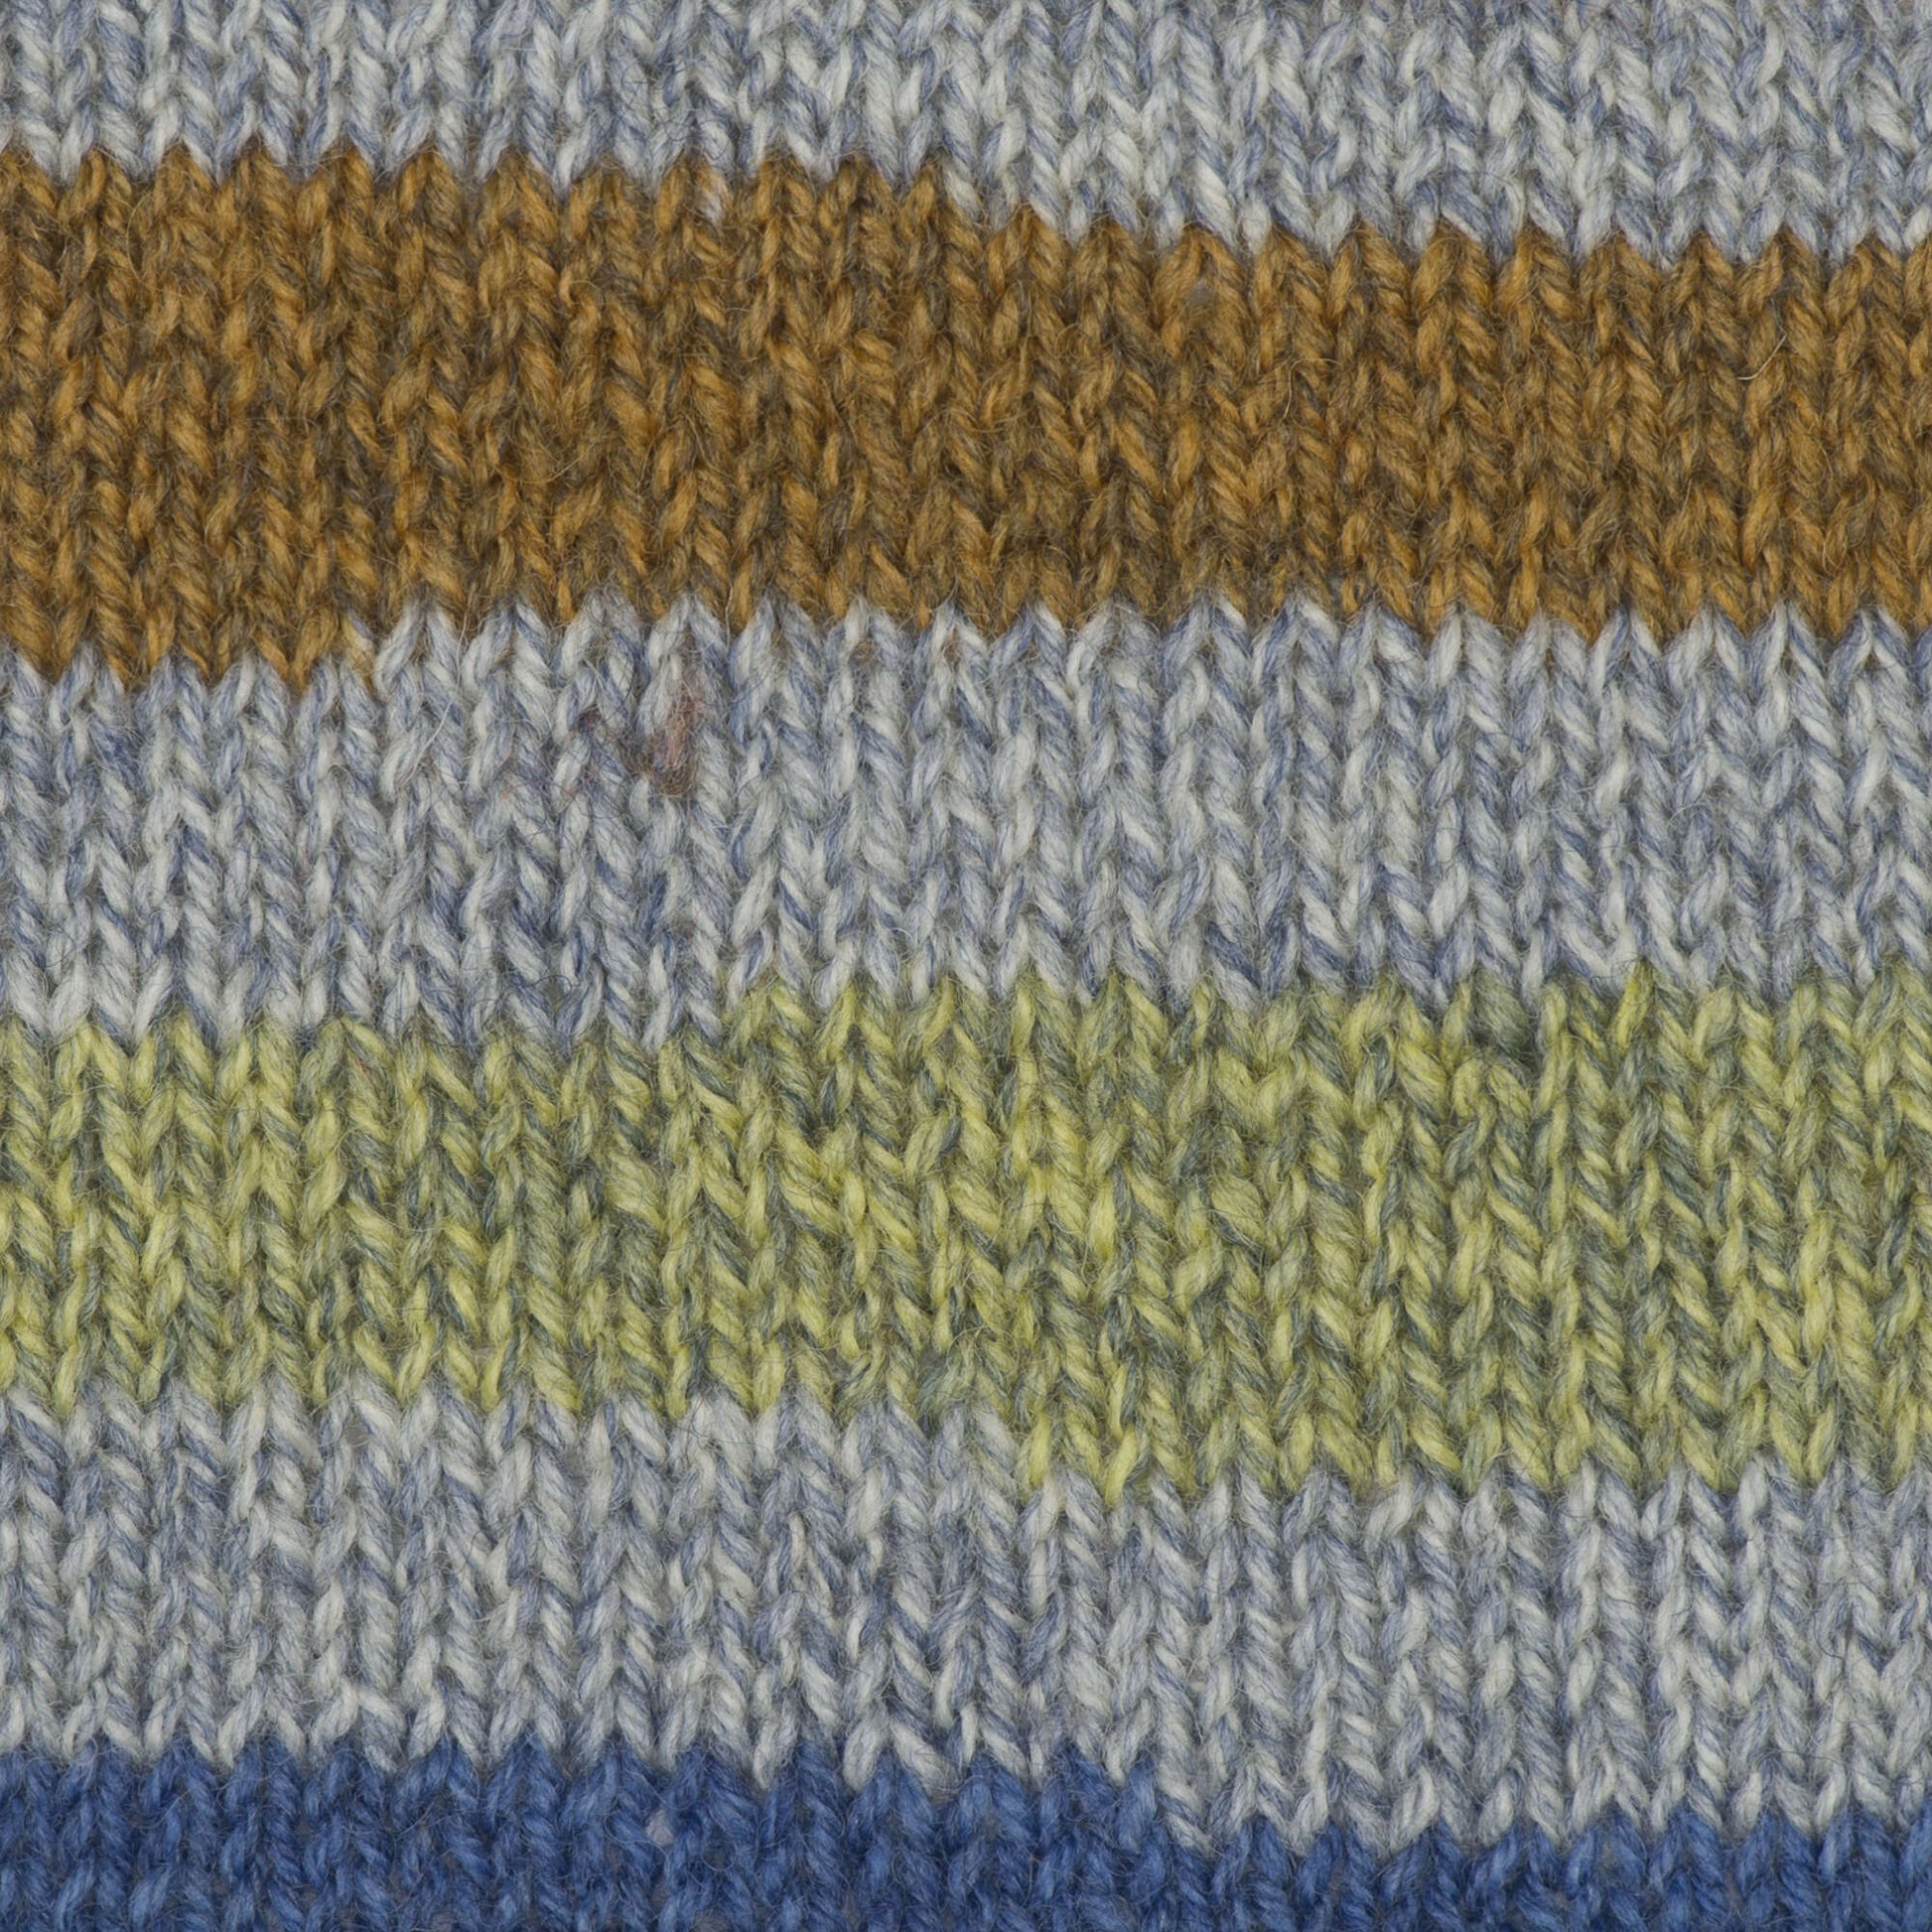 Patons Kroy Socks Yarn Blue Striped Ragg